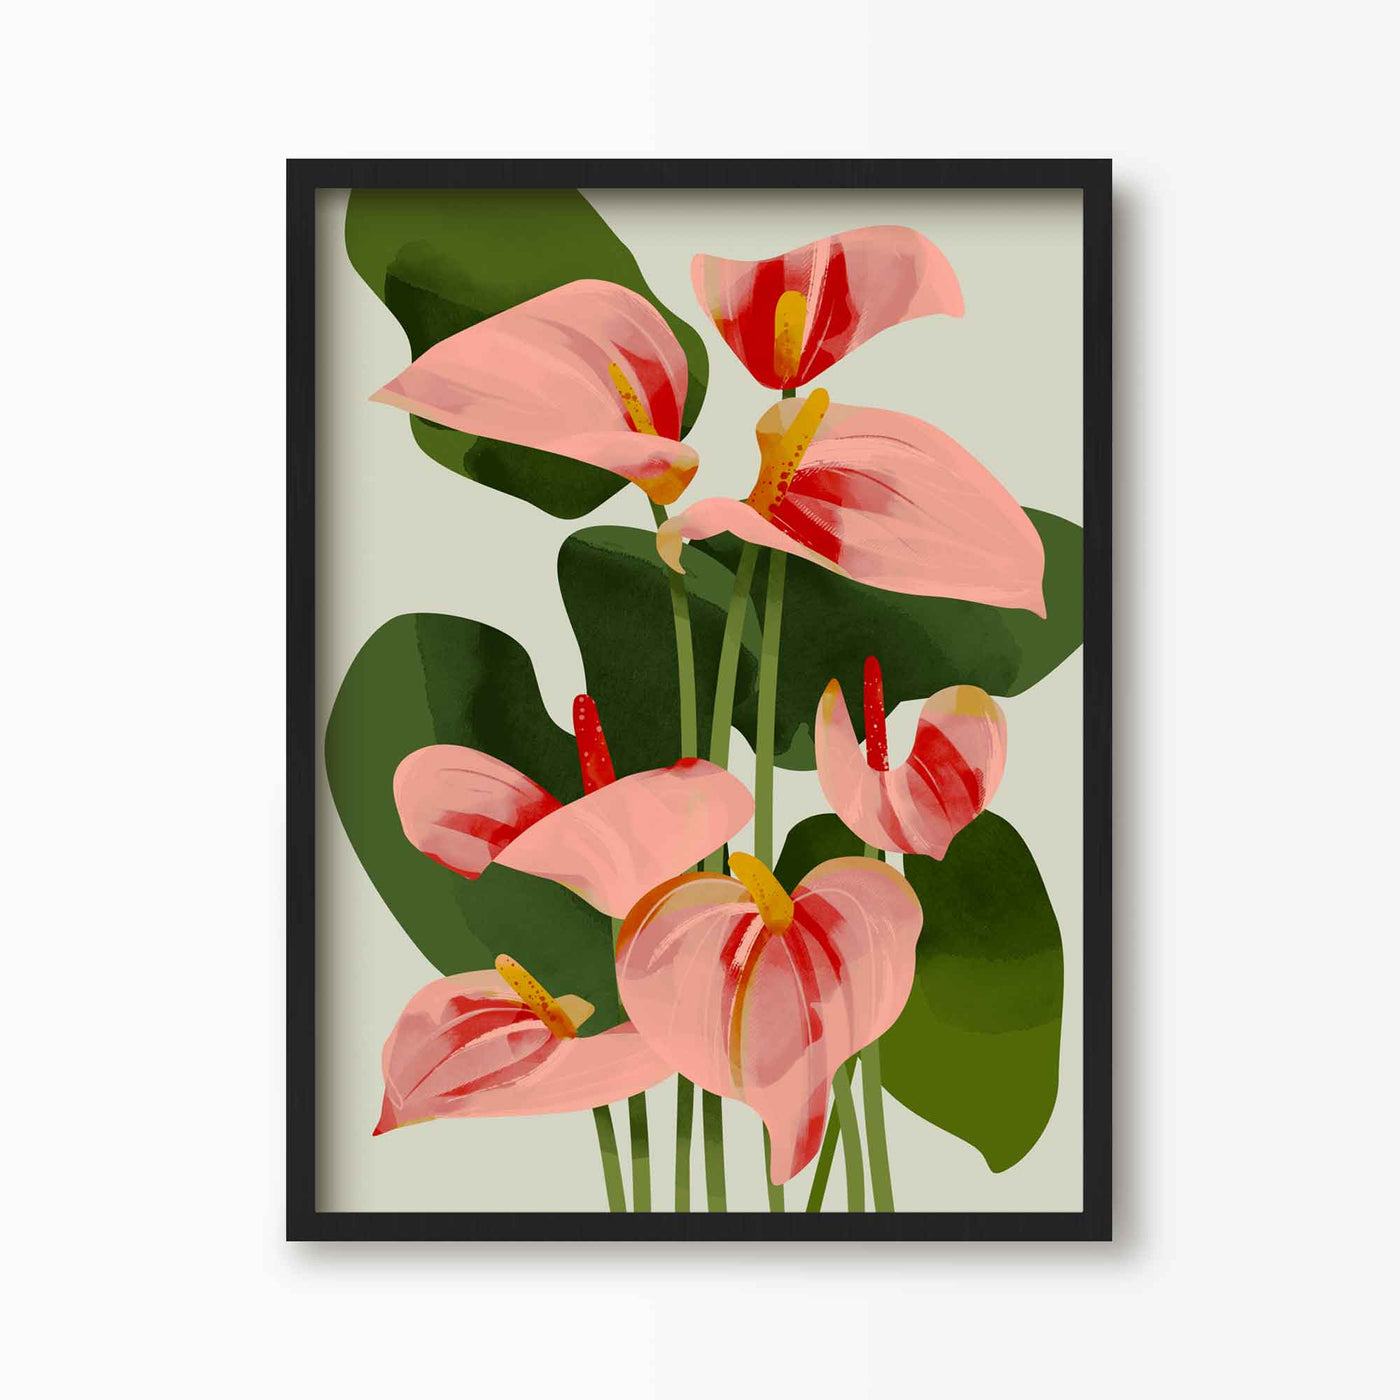 Green Lili 30x40cm (12x16") / Black Frame Flamingo Flowers Print